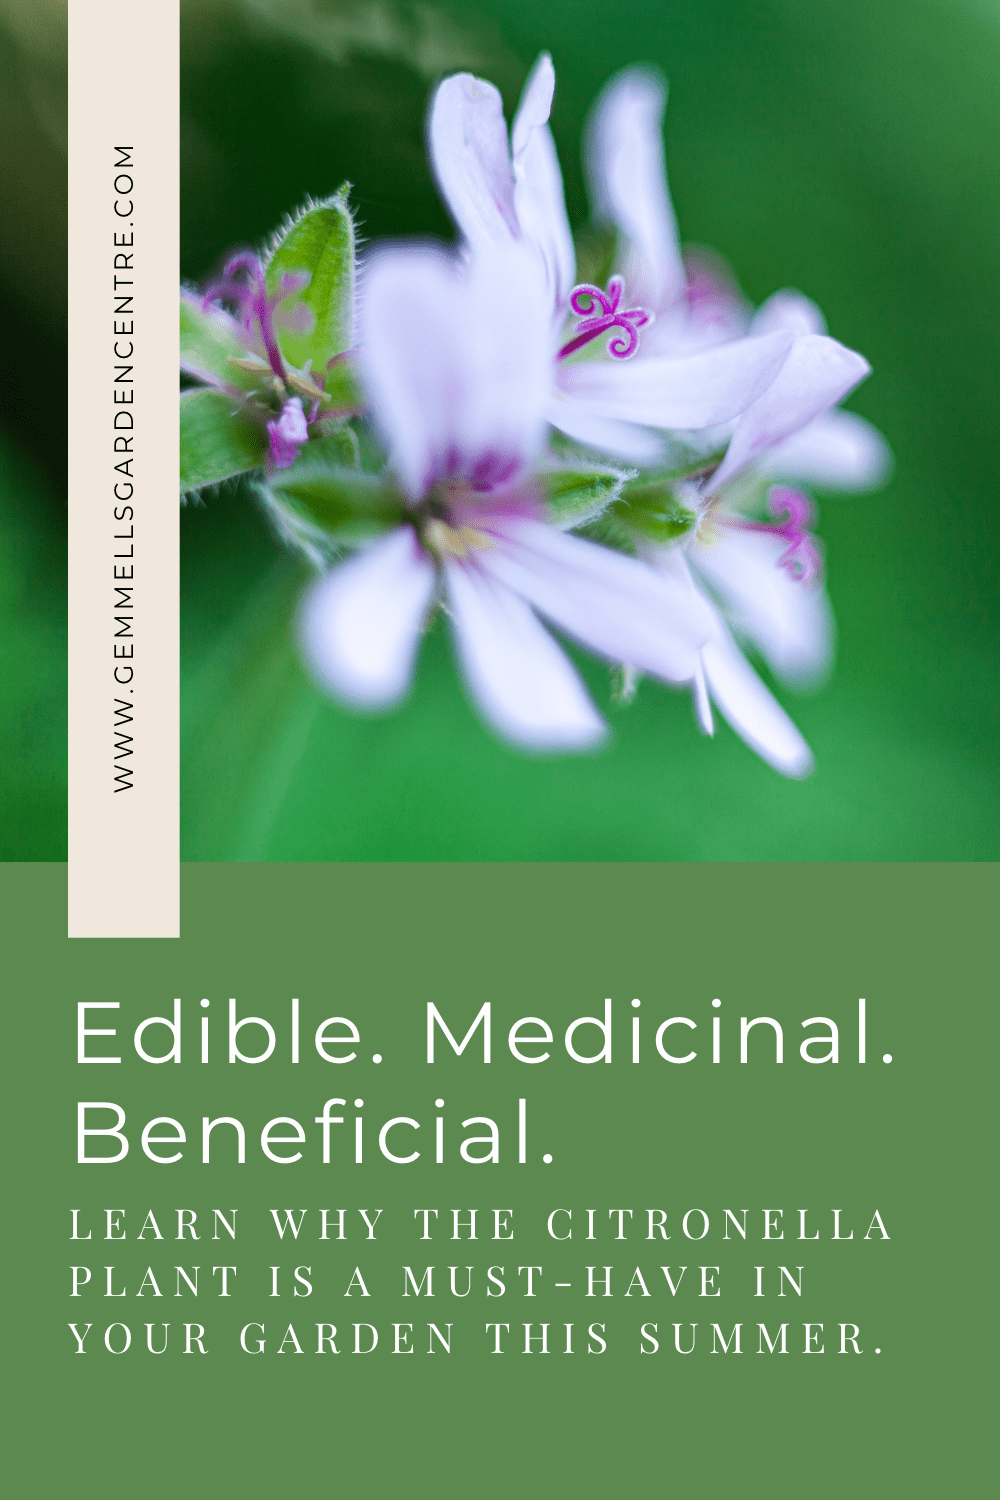 Edible Medicinal Beneficial Citronella is a must have plant